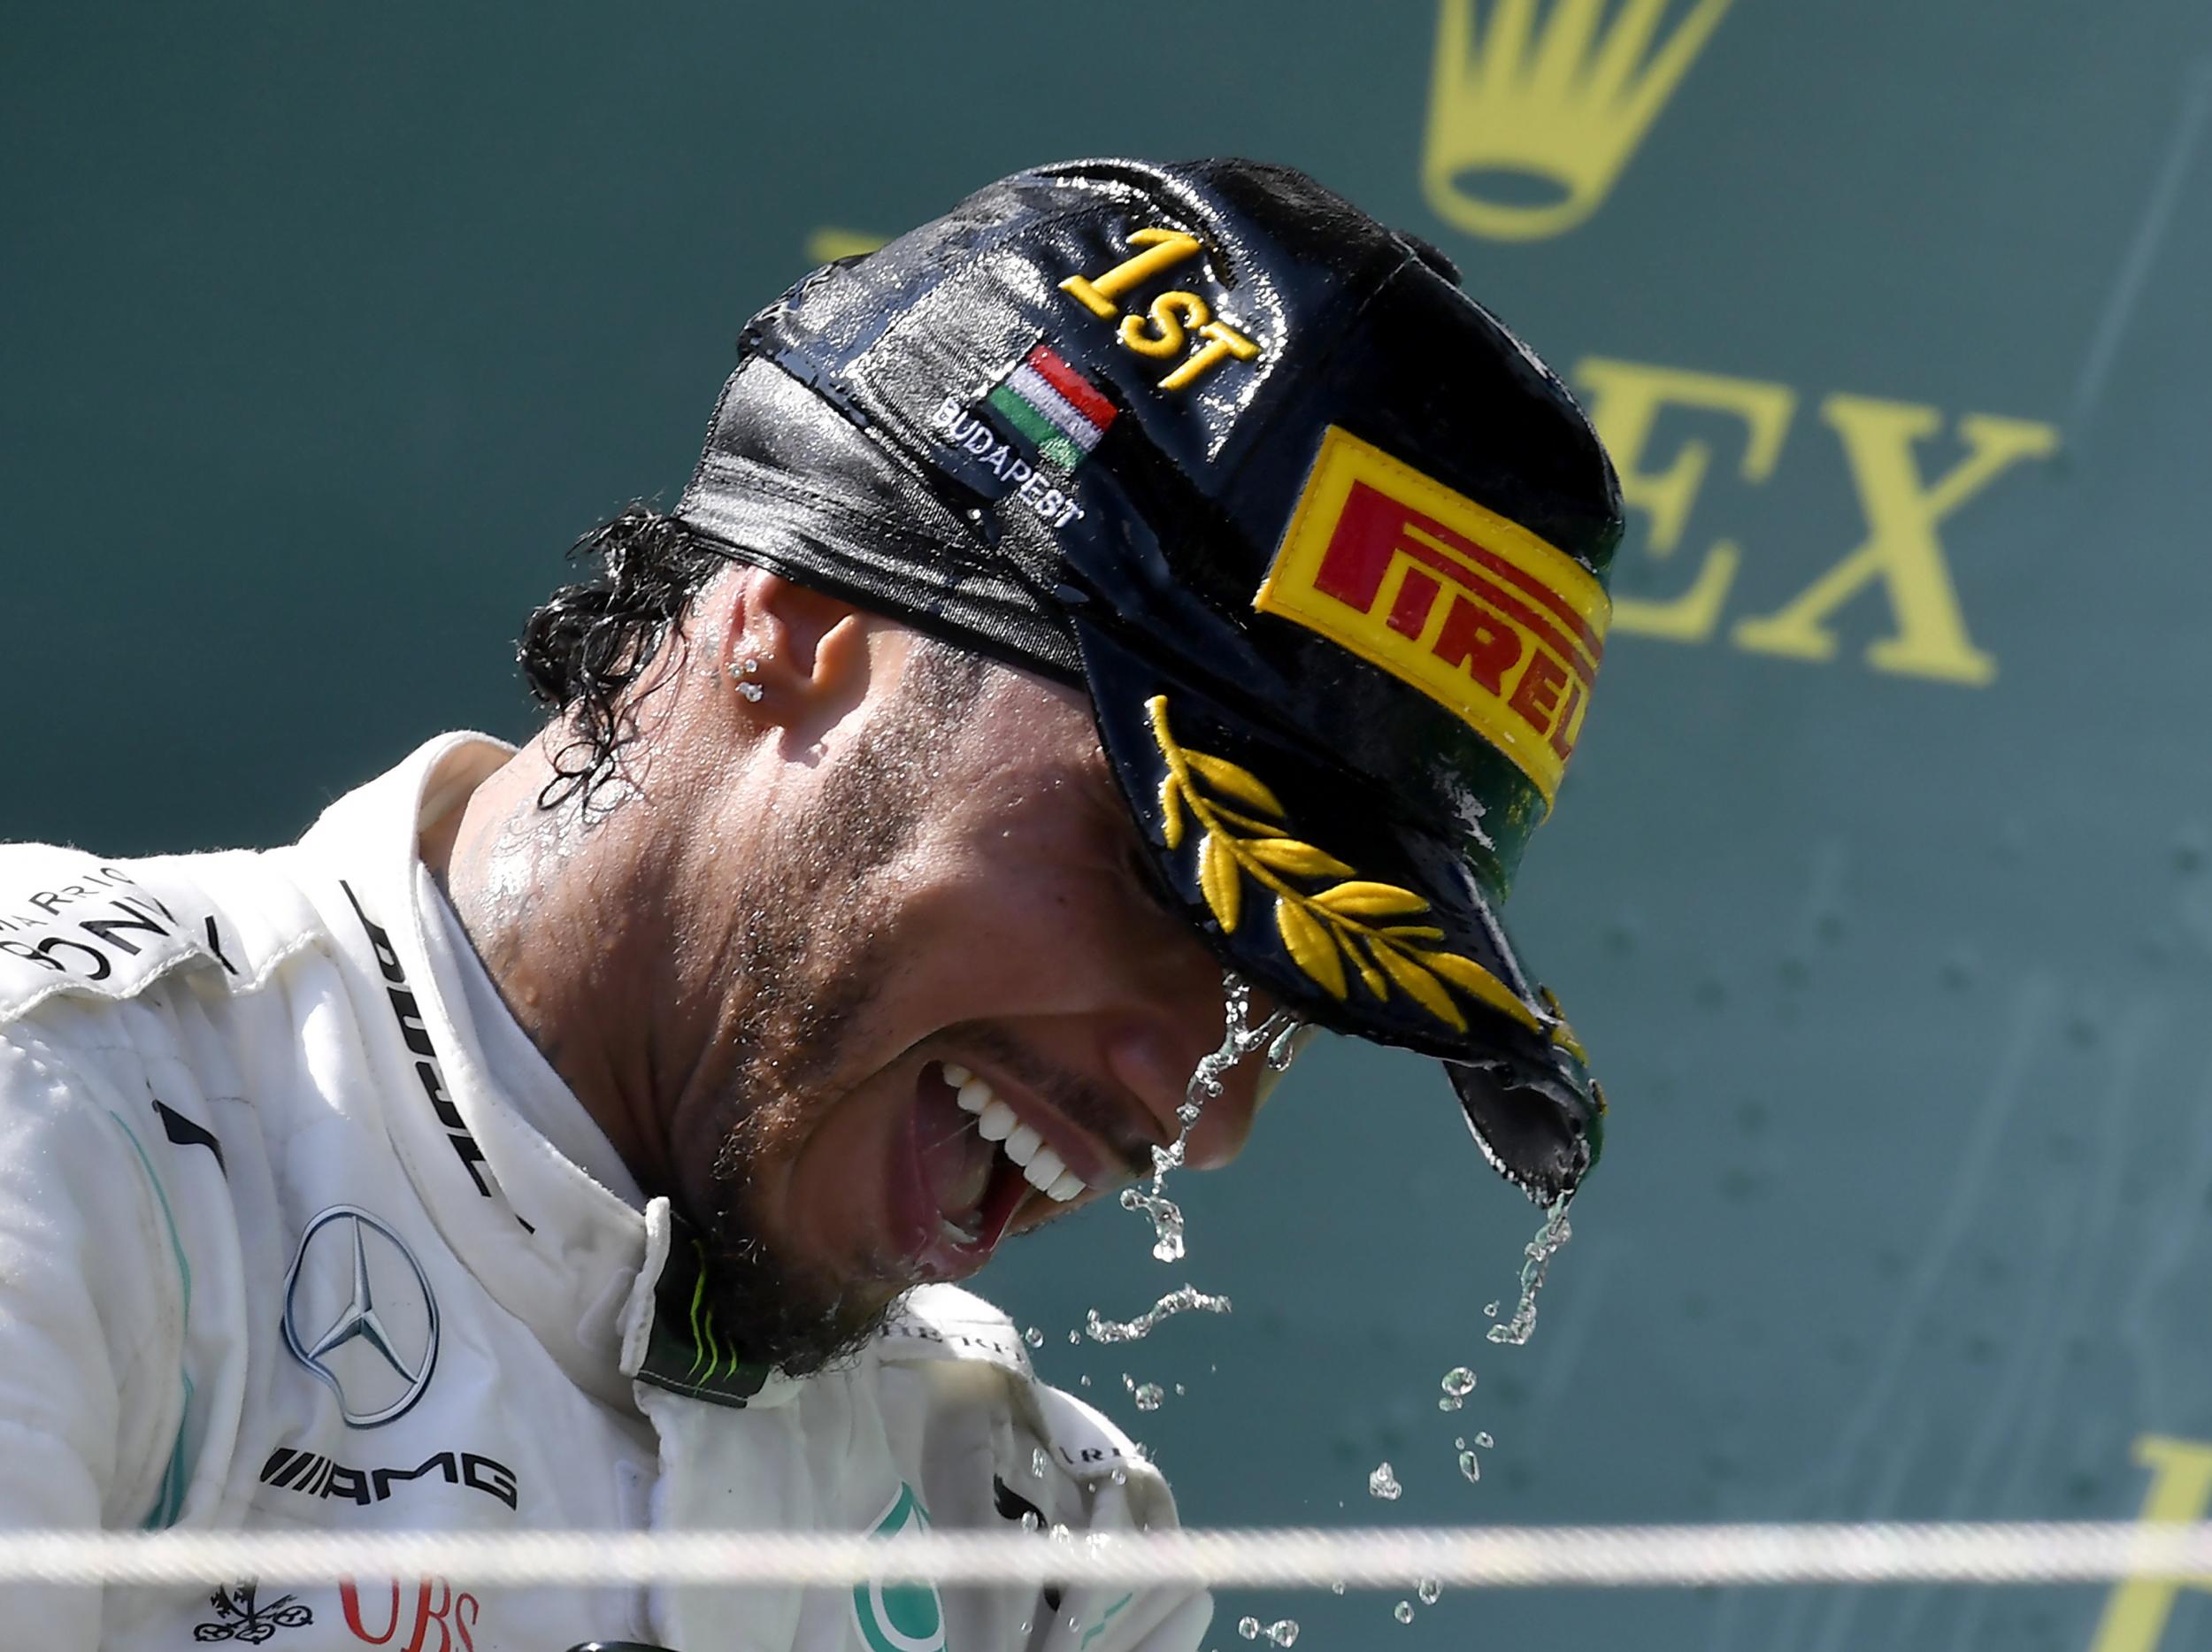 Lewis Hamilton celebrates his race win